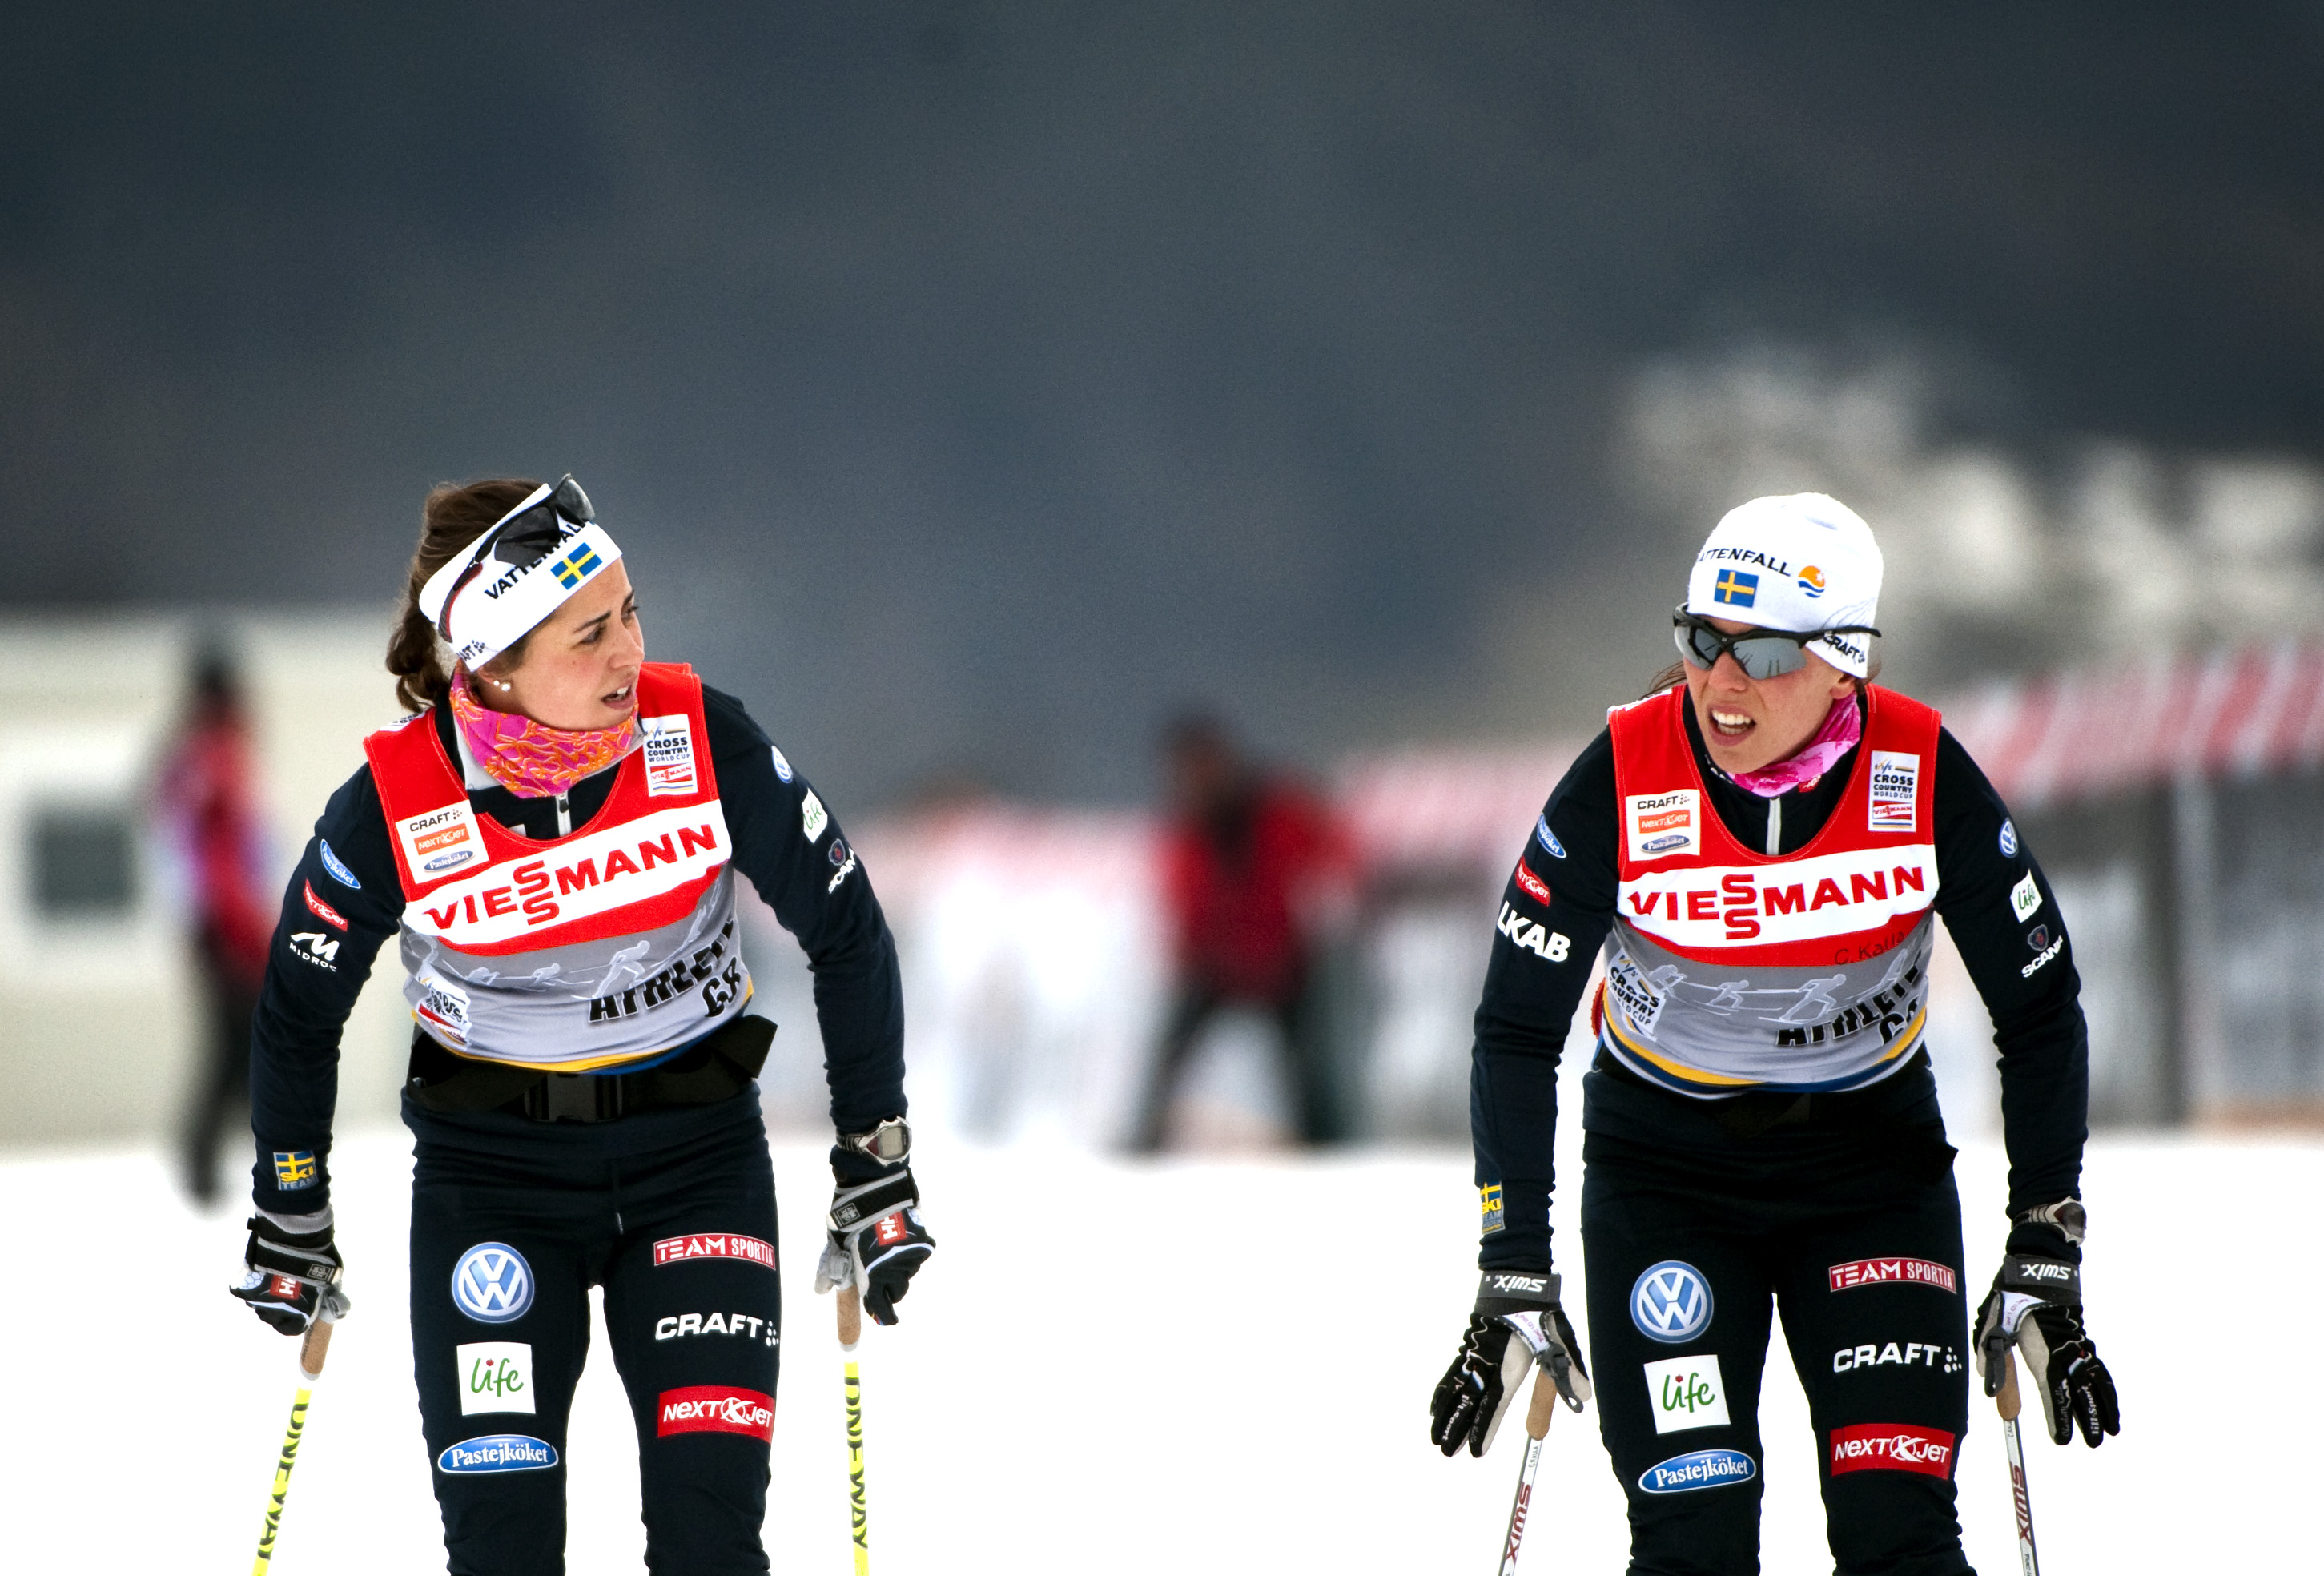 Charlotte Kalla, Langdskidakning, Anna Haag, Tour de Ski, skidor